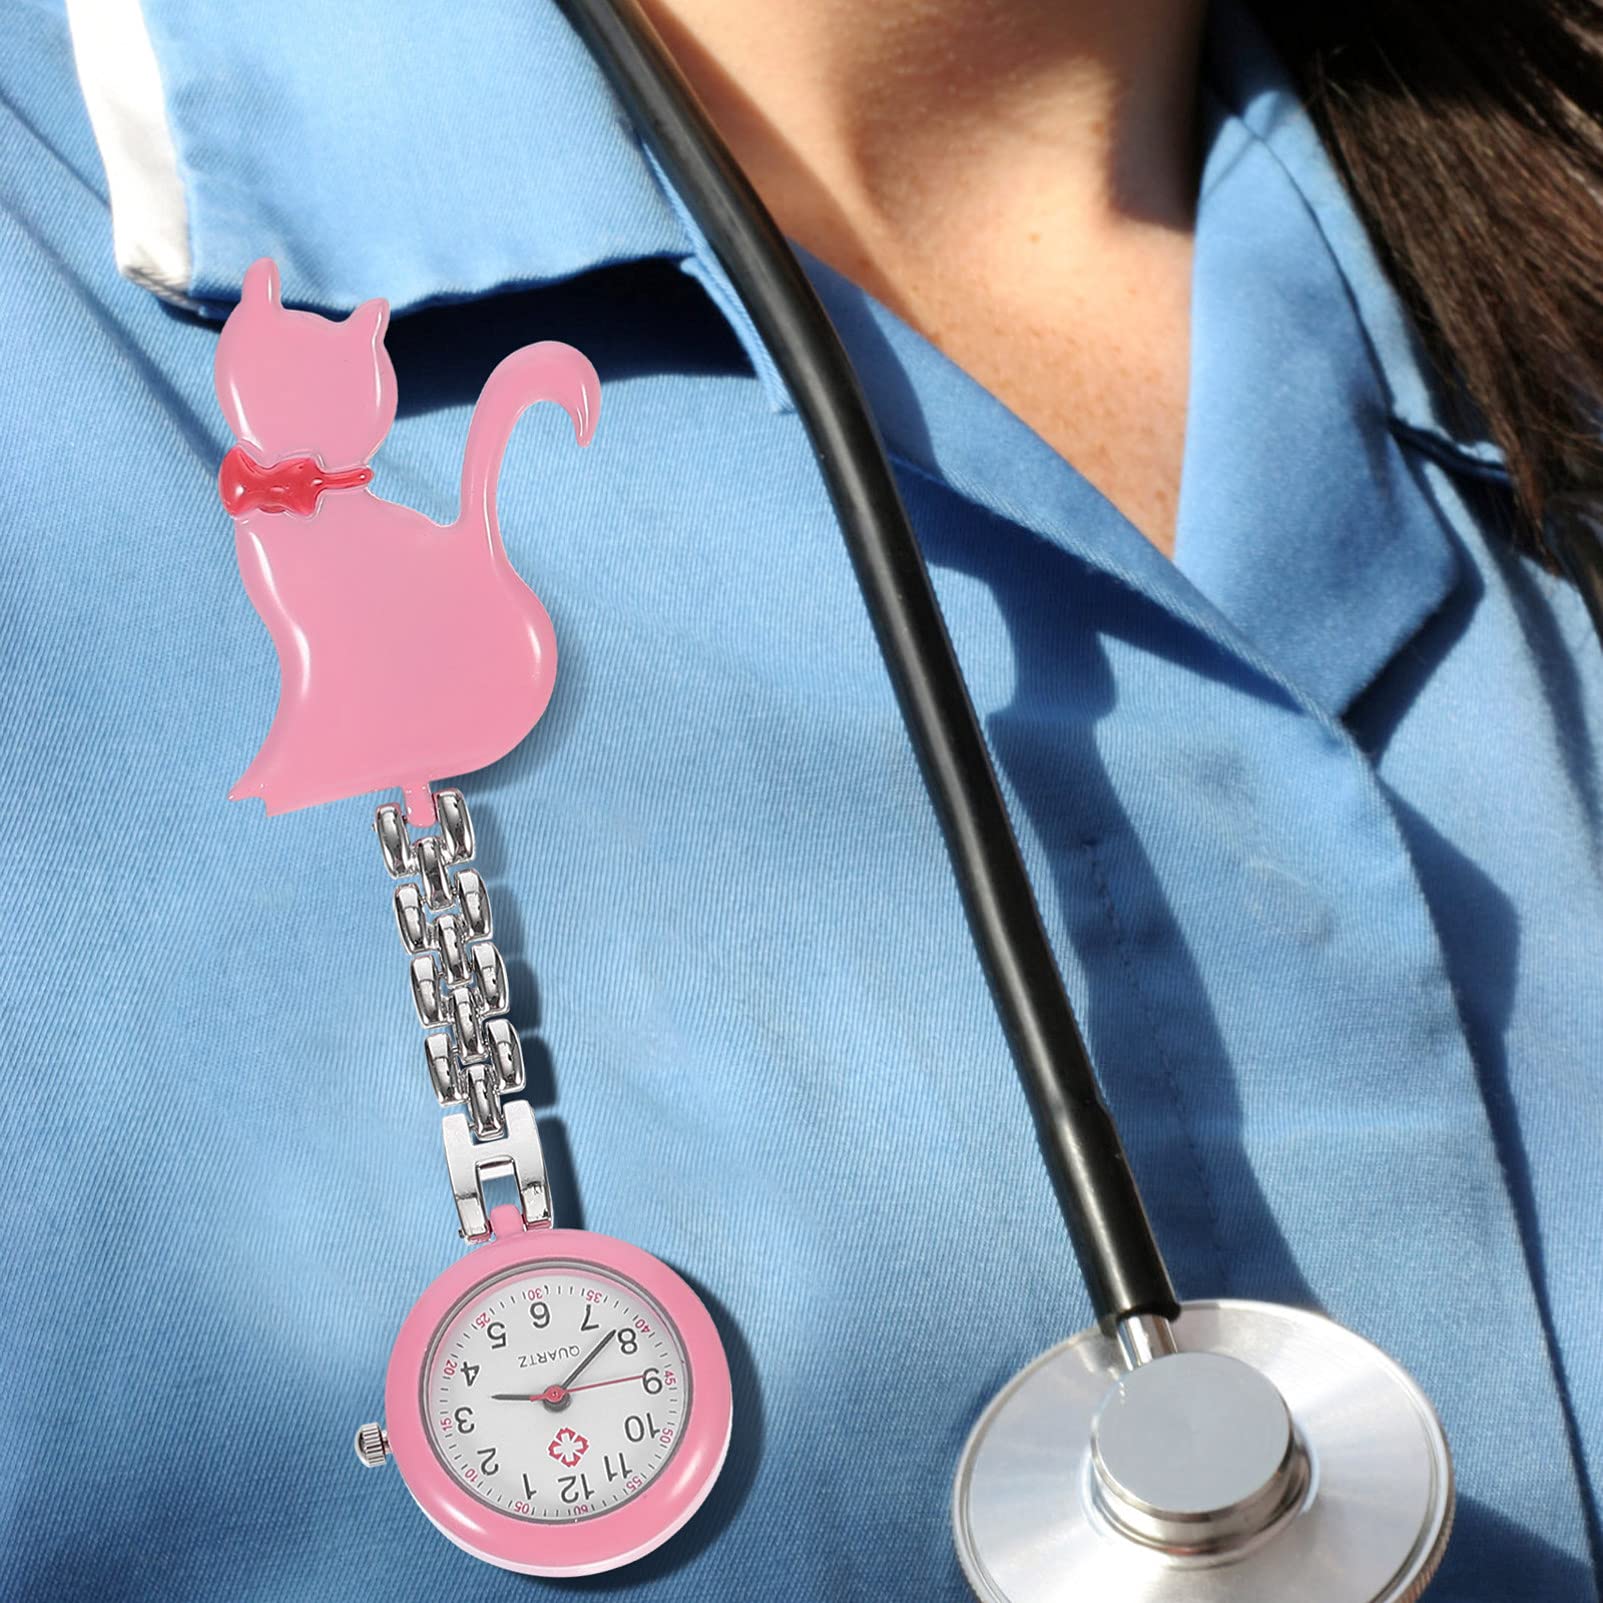 Hemobllo Clip Nurse Watch Clip- on Fob Watches Nurse Pocket Watch Cat Badge Watch Glow in Dark Quartz Watch for Paramedic Nurses Doctors